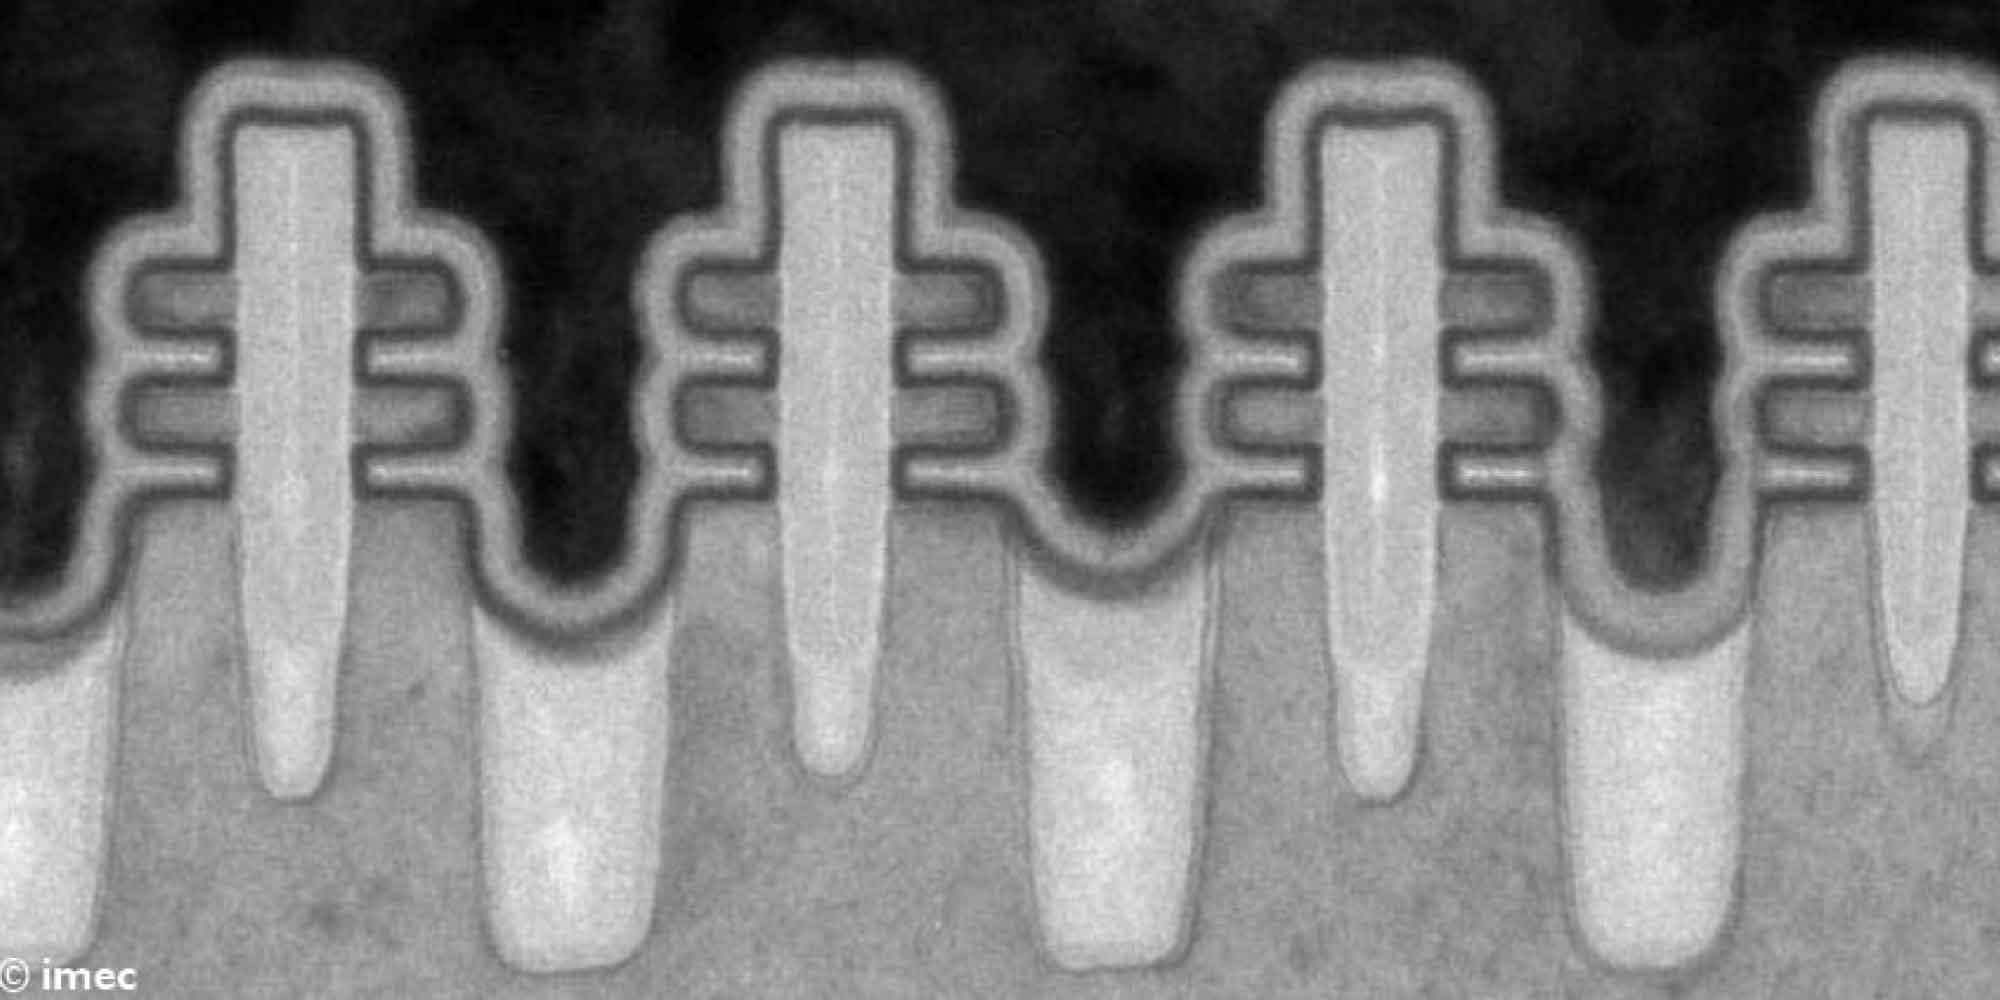 Nanosheet Transistor Architectures imec